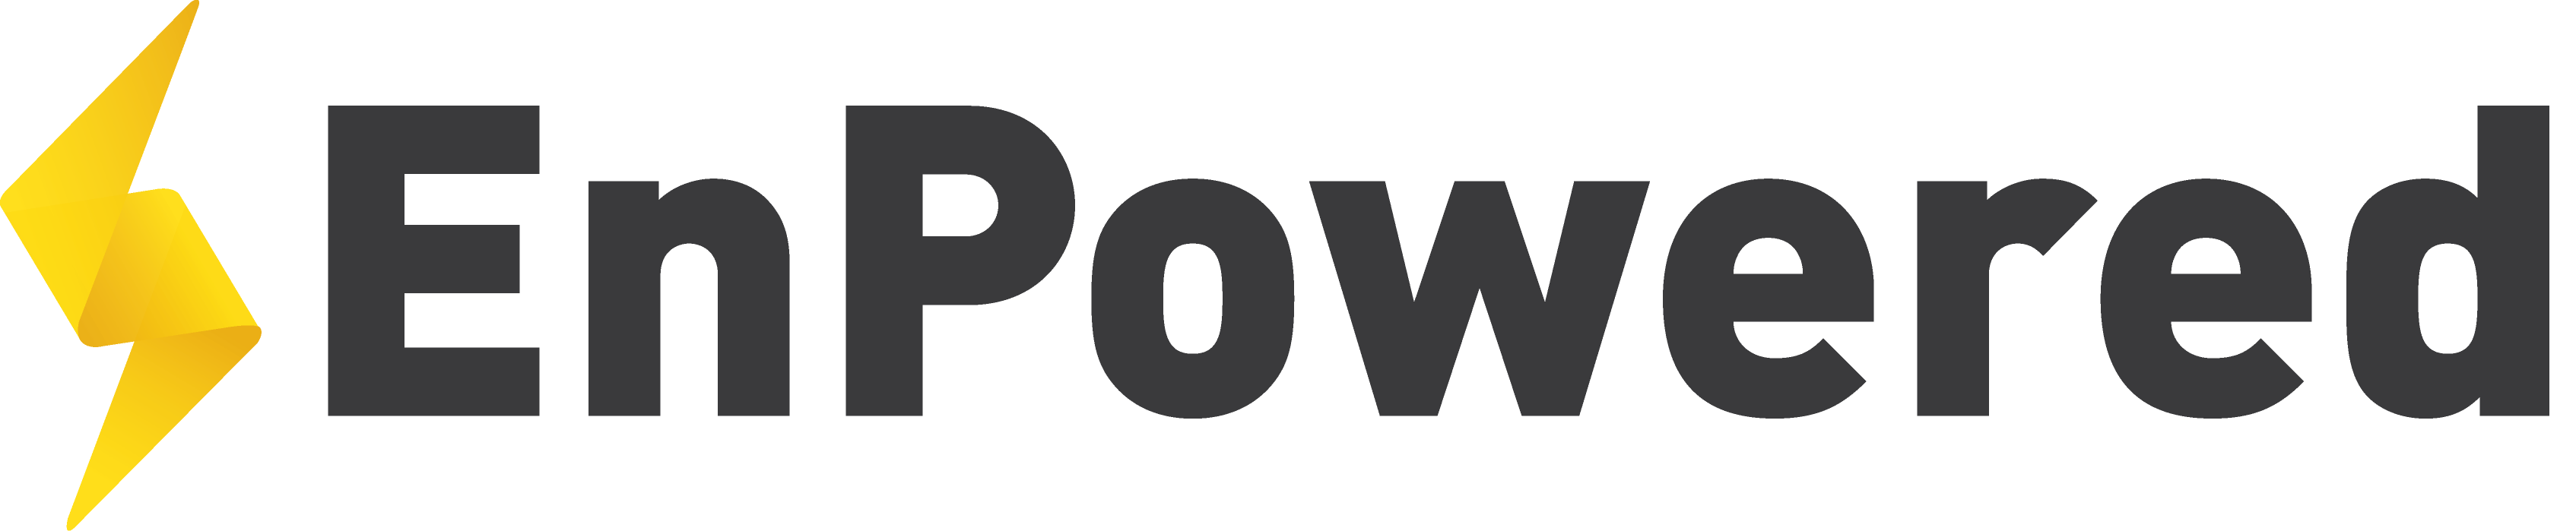 Enpowered Logo Colour 2